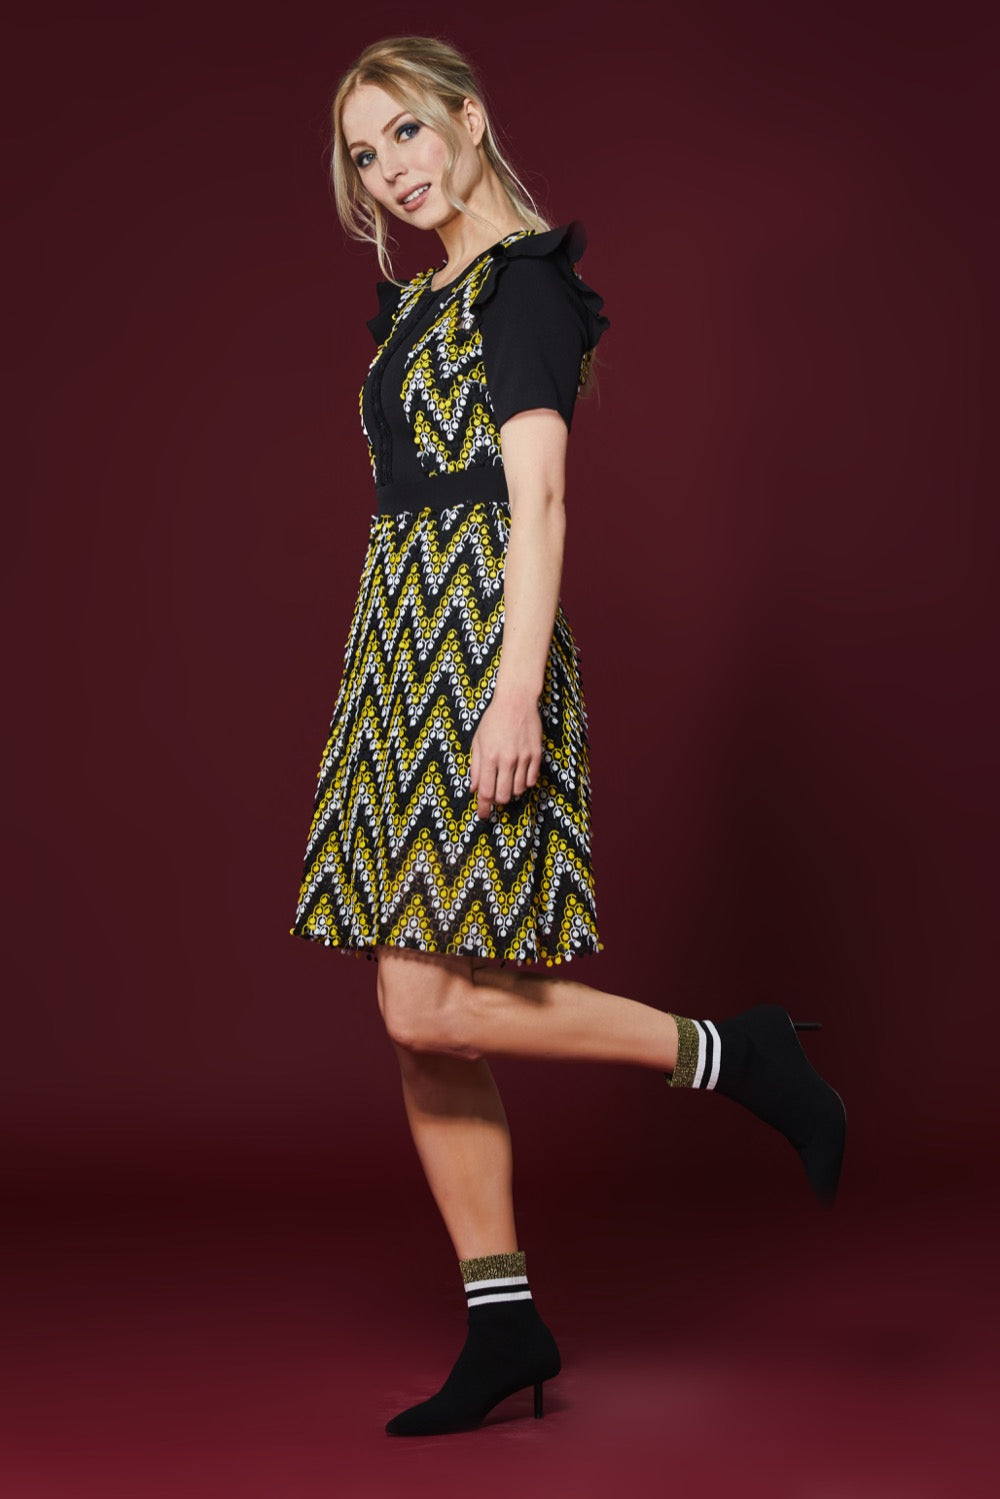 Melissa Dress DRL220 Black/Lace Contrast Sample, Size 8 UK